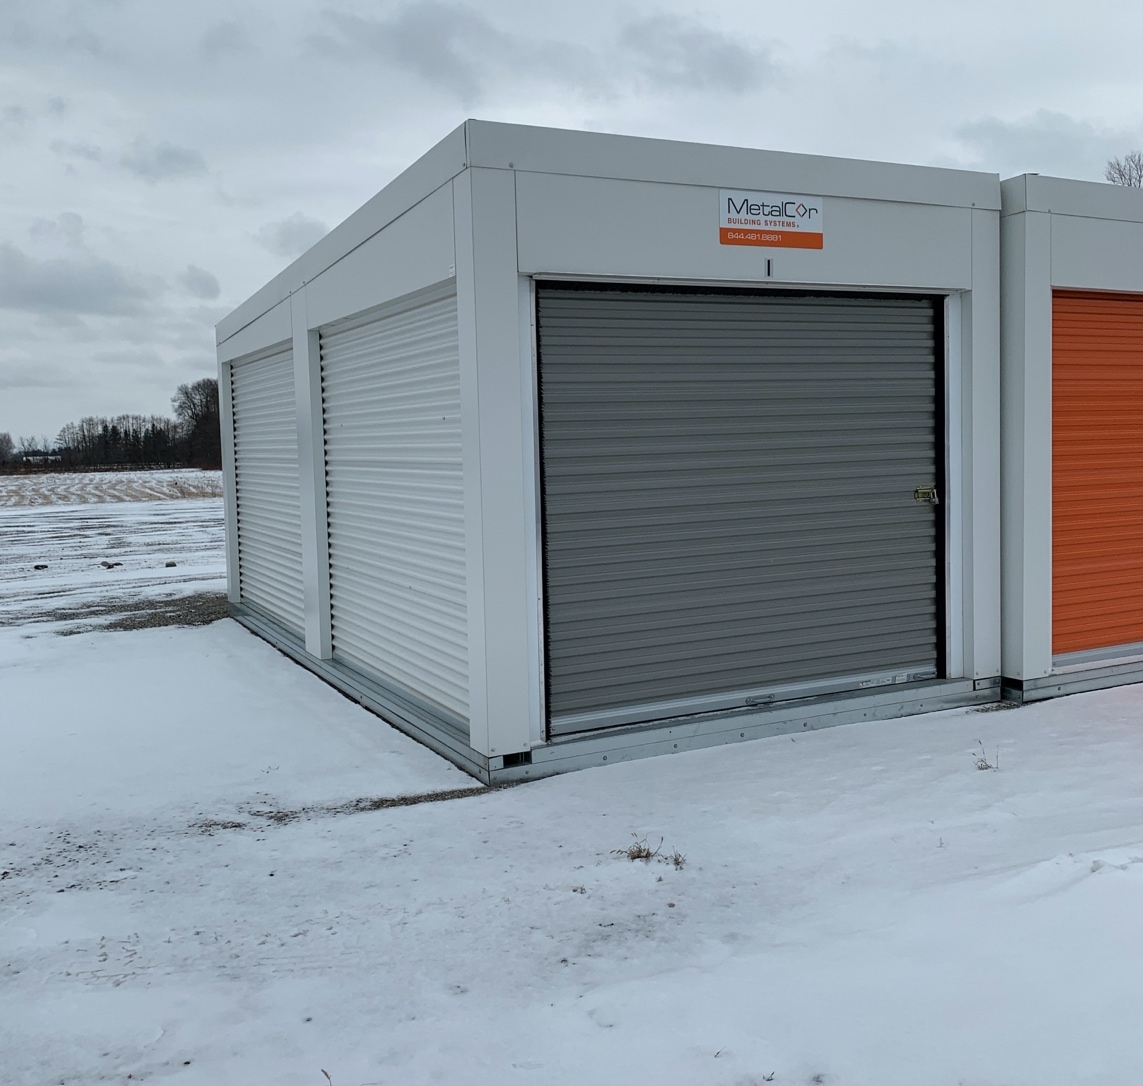 MetalCor storage unit with one door